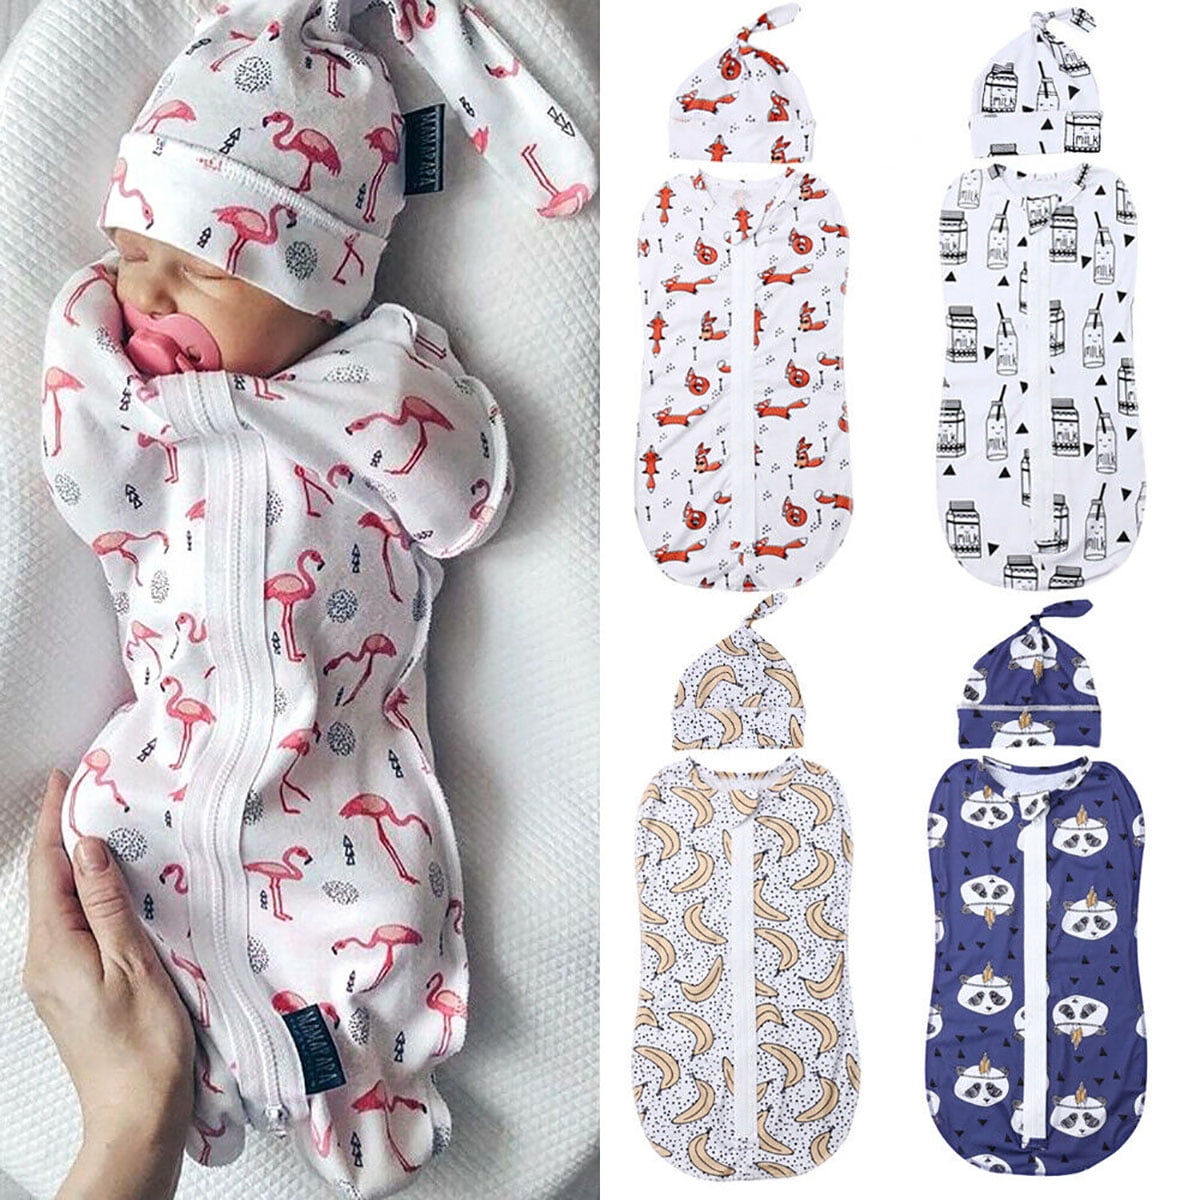 0-12 Month Newborn Baby Swaddle Blankets Bat Romper Hooded Sleeping Bag for Girls Boys Kids